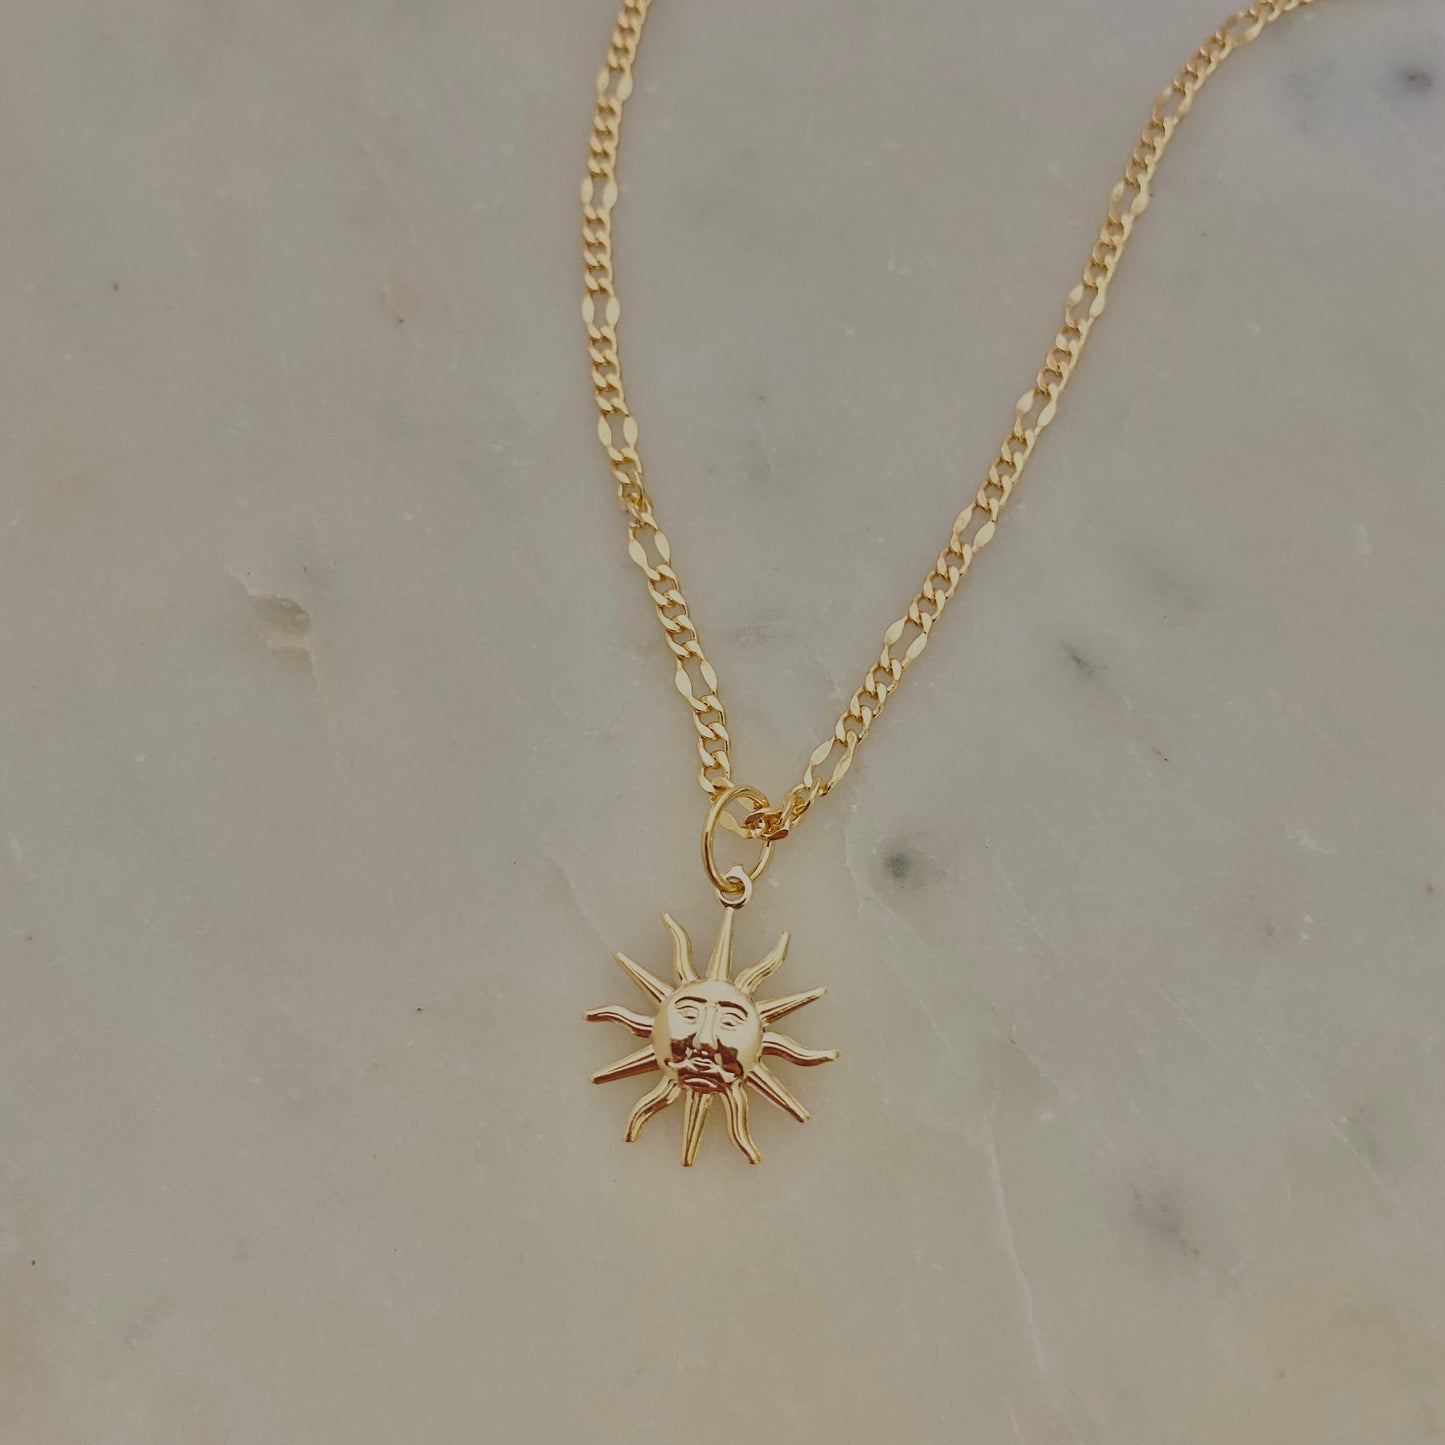 Sunrise Cuban Chain Necklace 18k Gold Filled